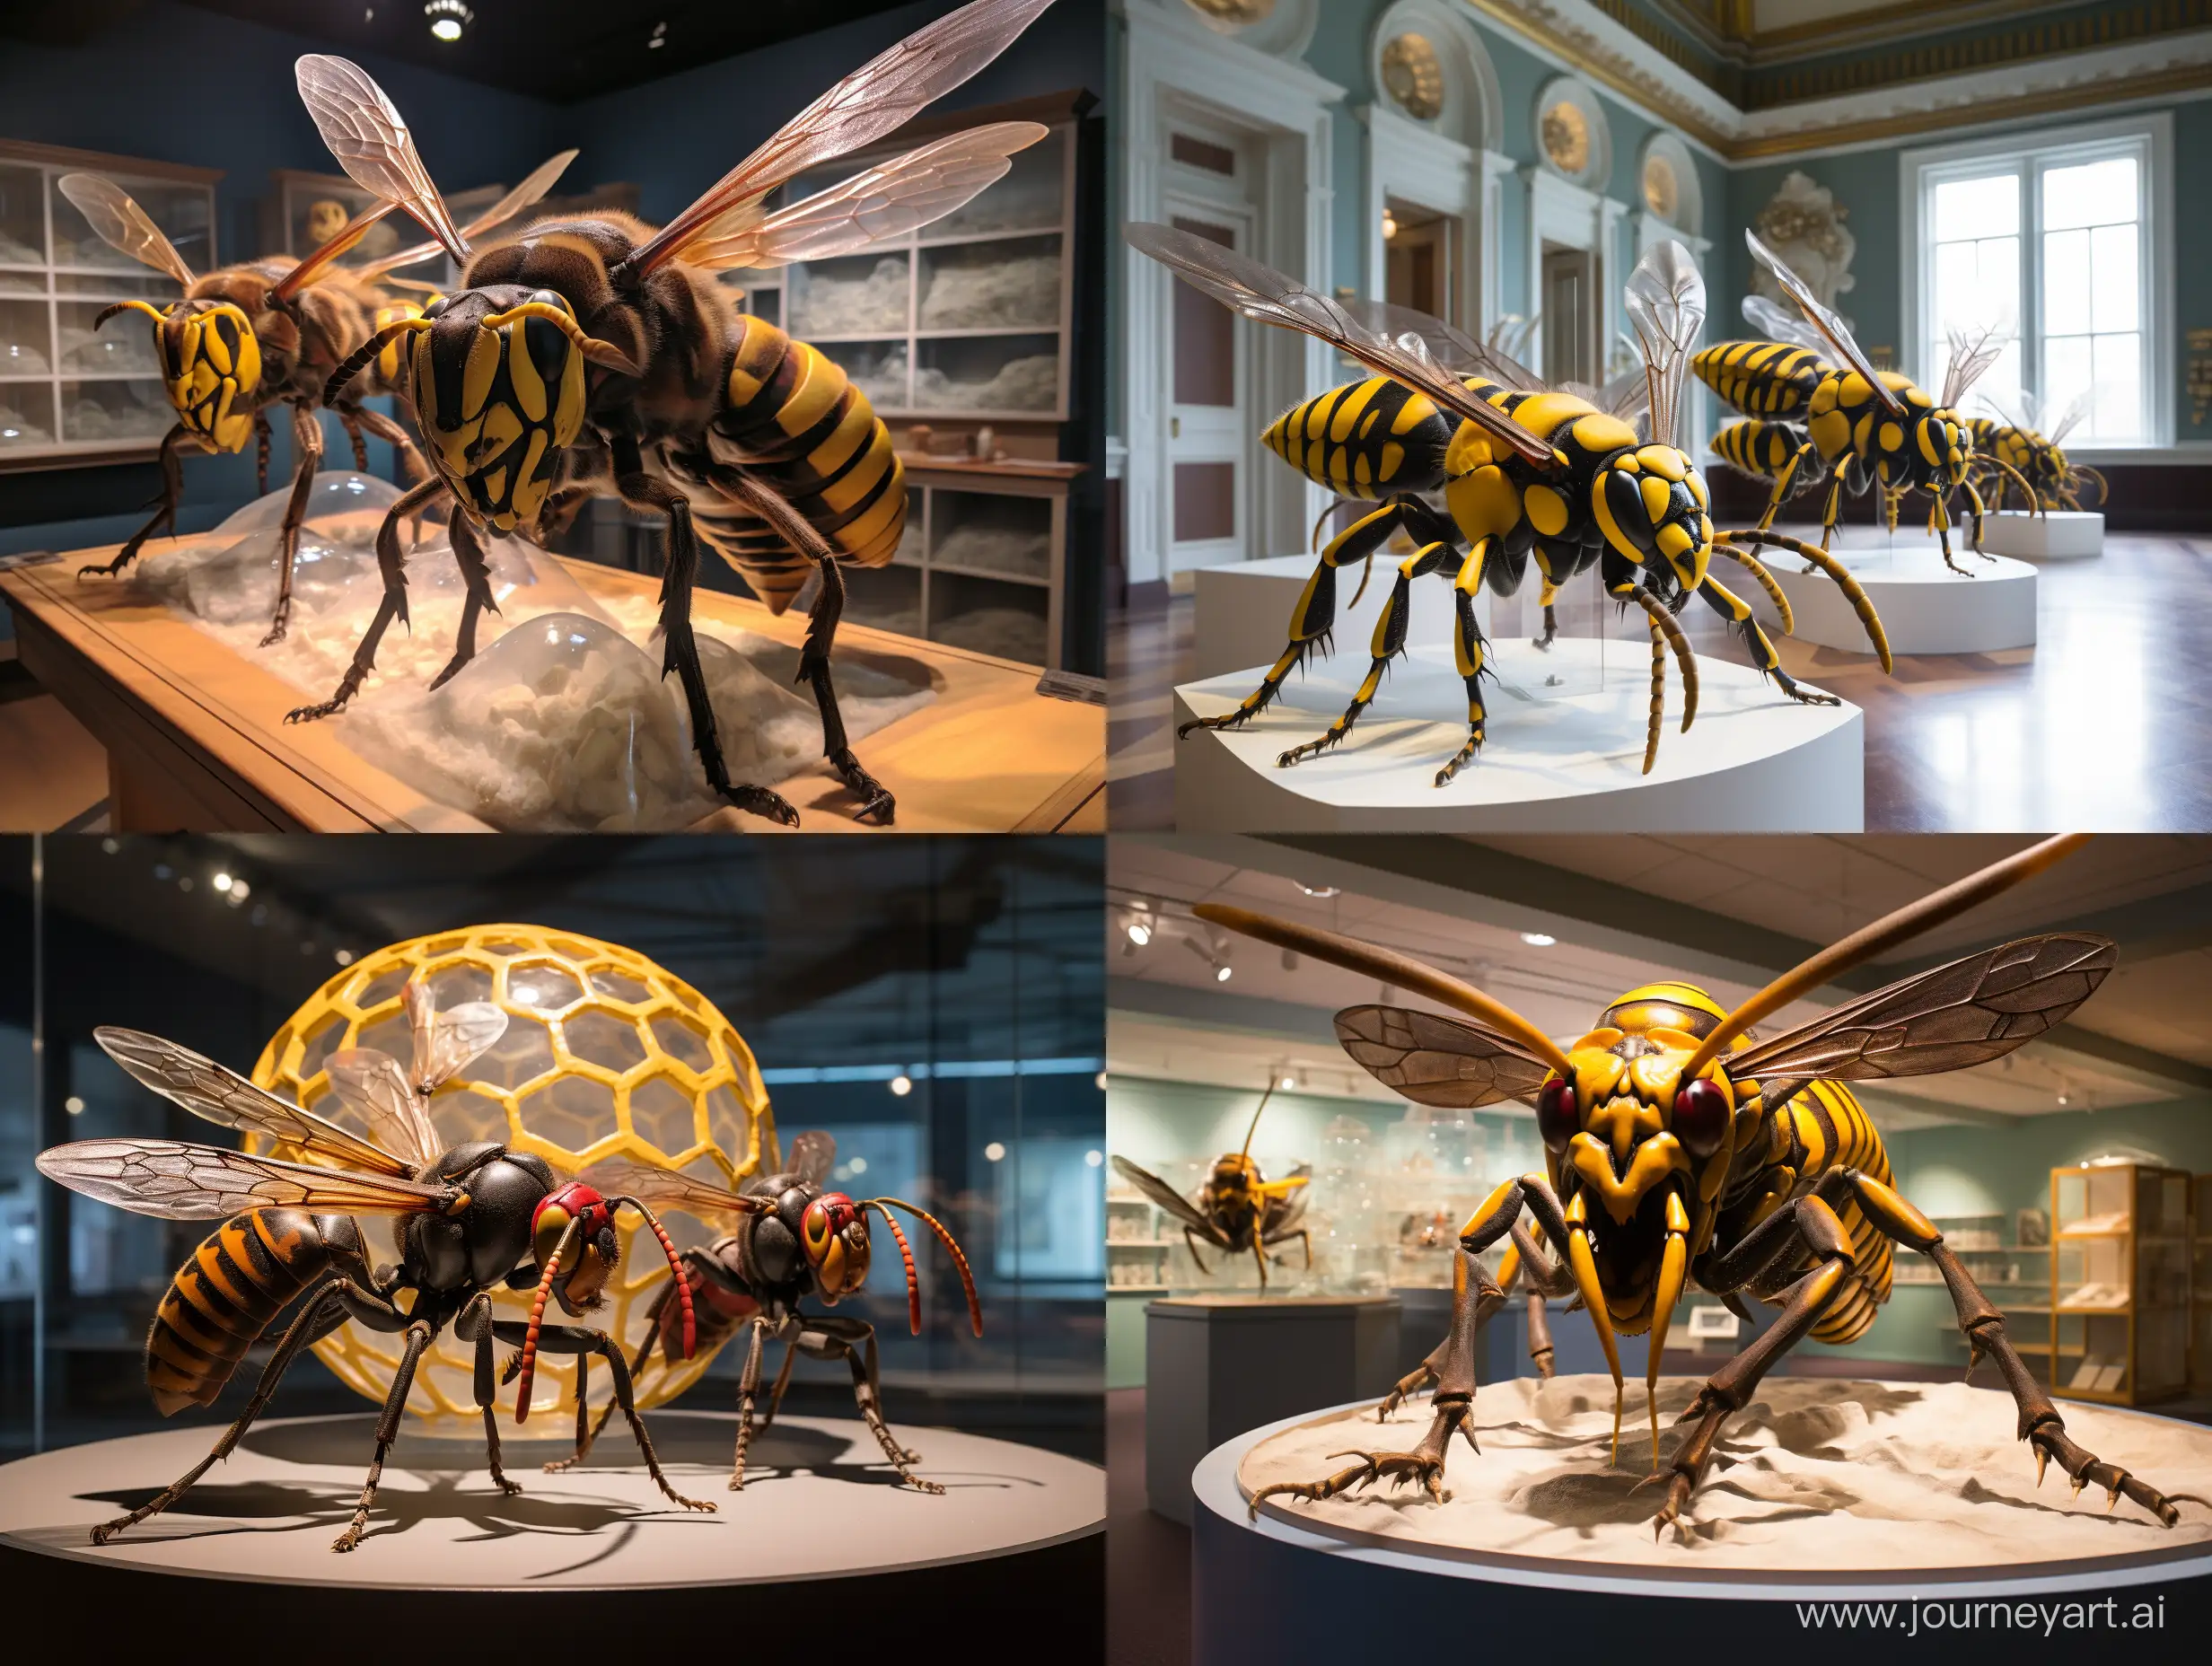 wasps replica in a museum